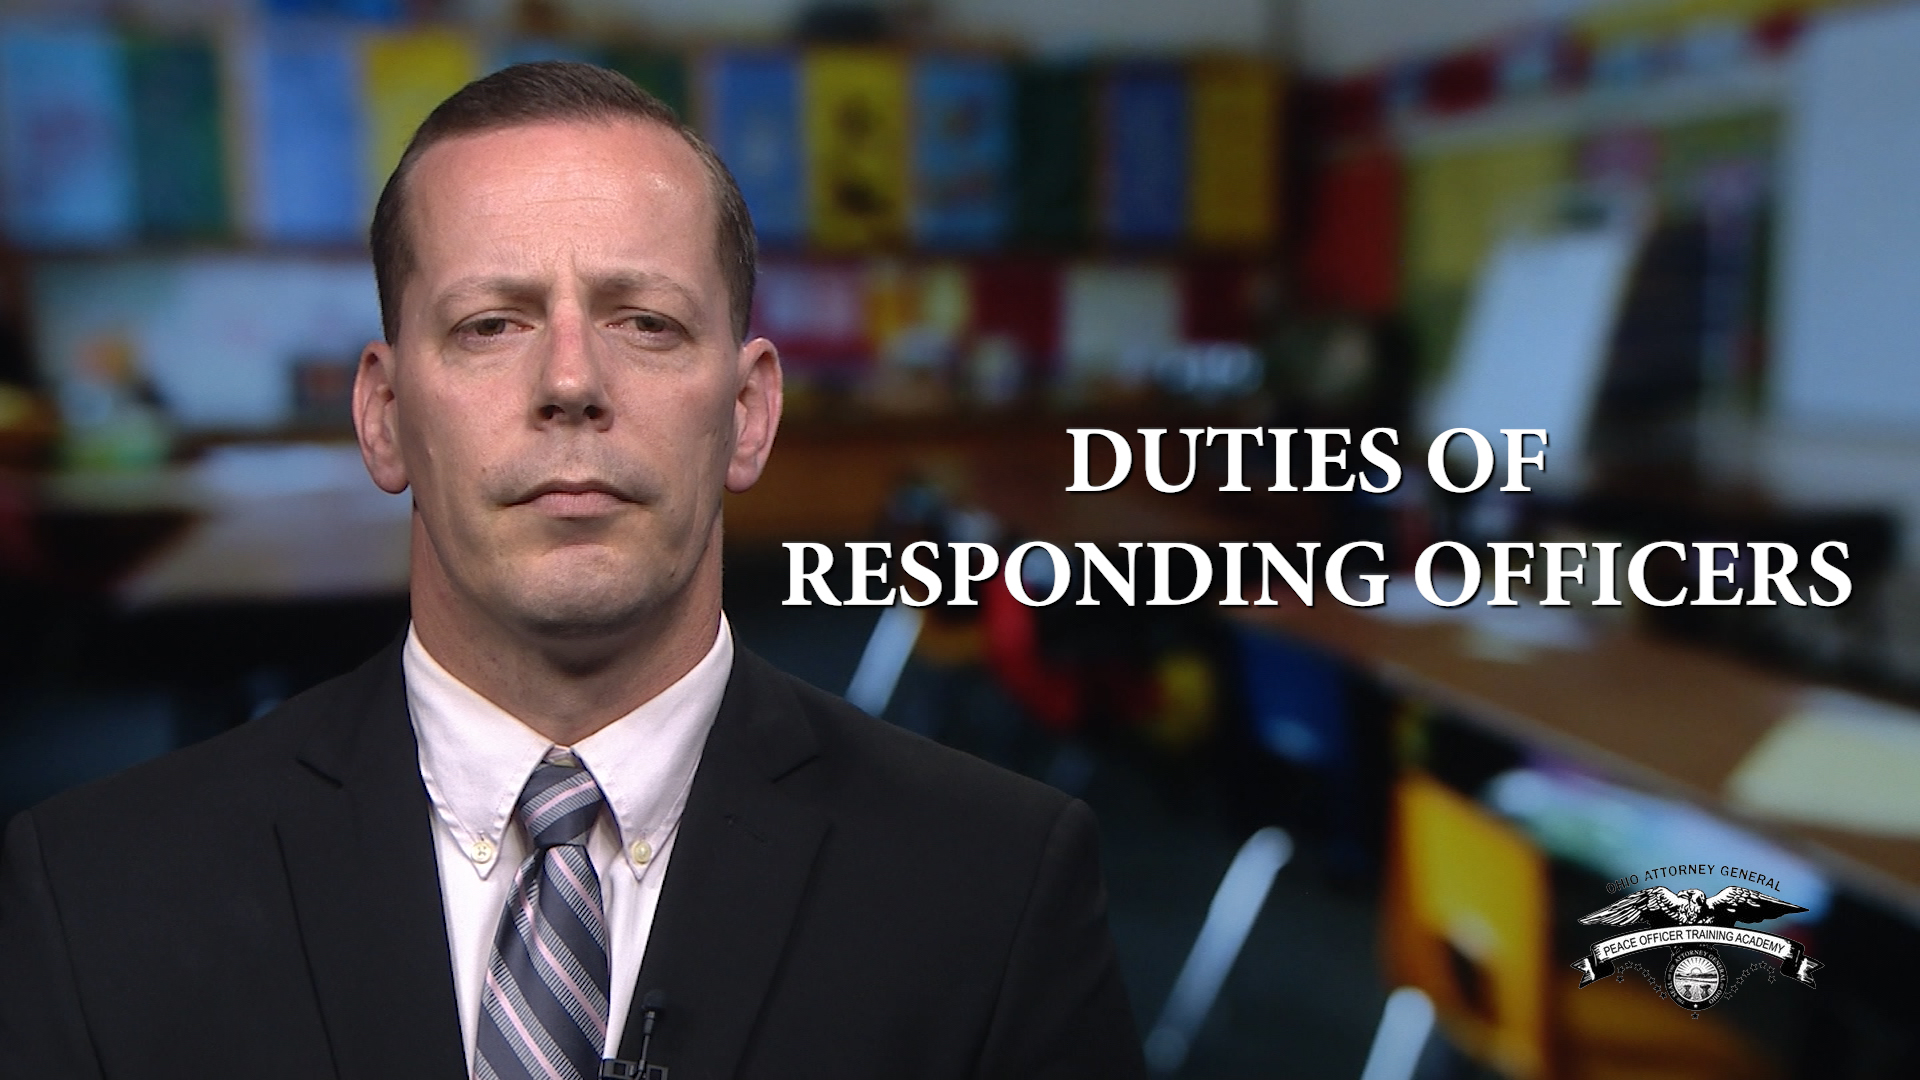 Video 8: Duties of Responding Officers